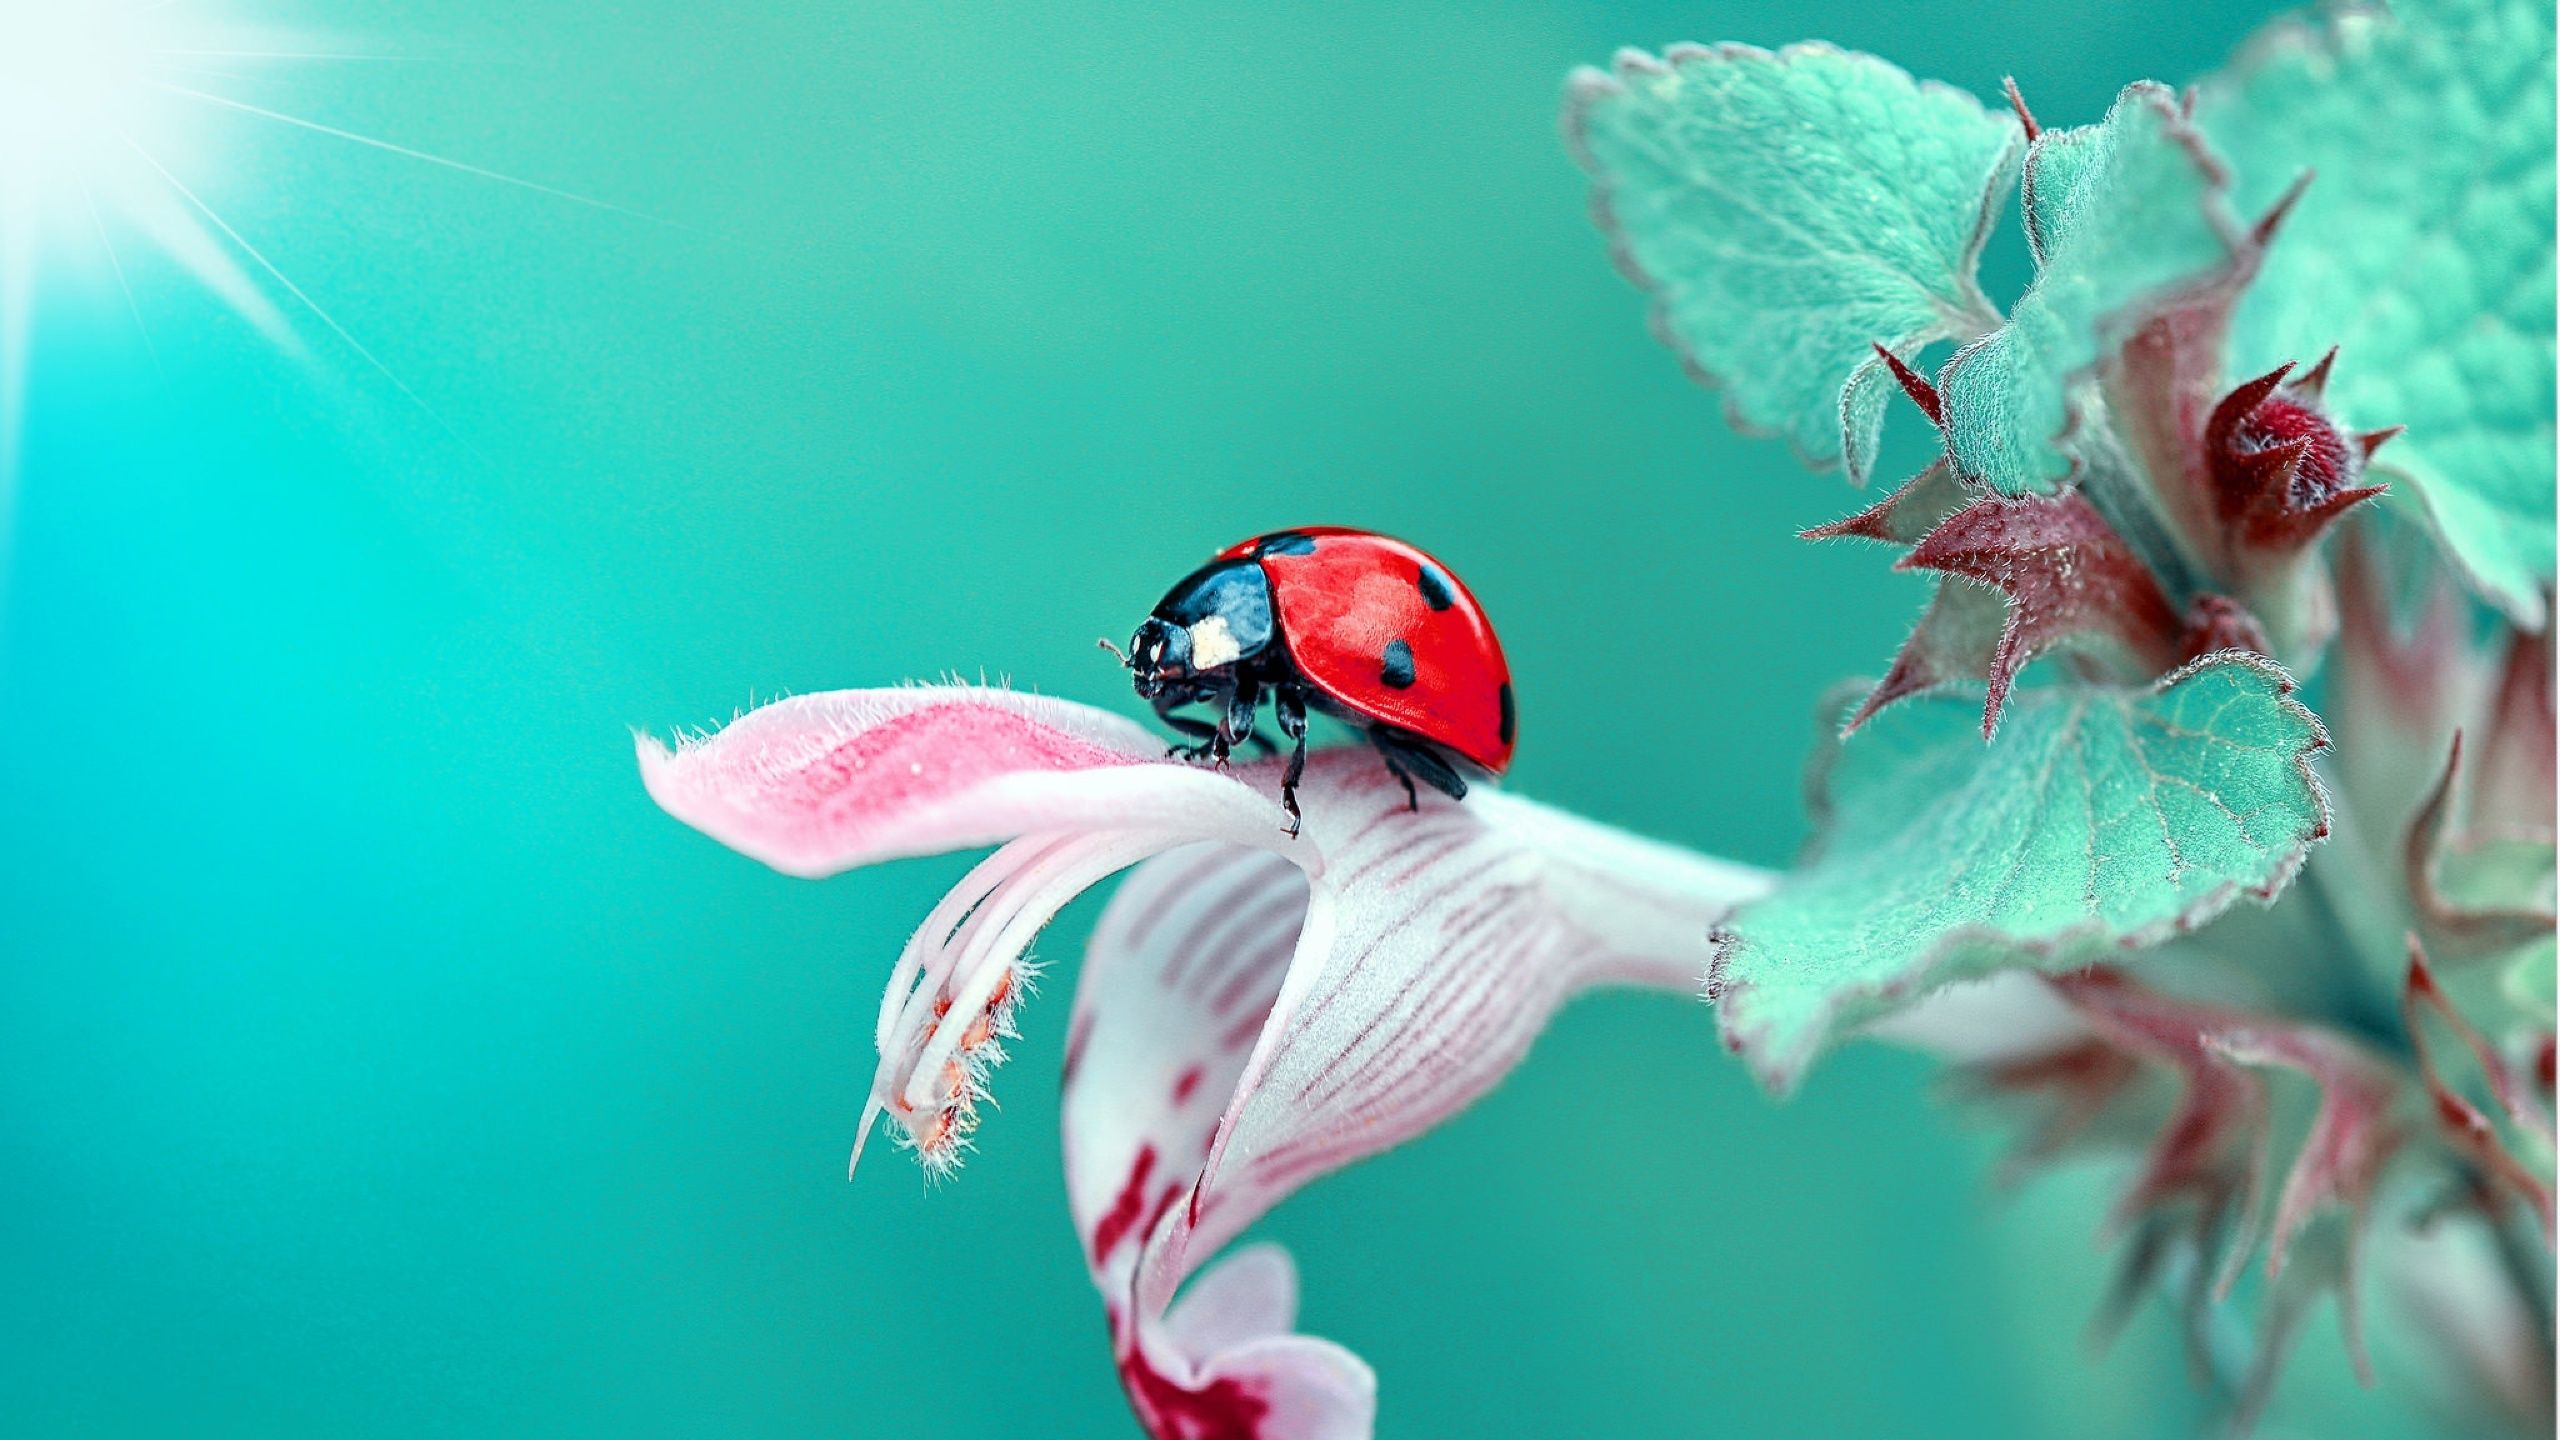 Insect Ladybug Macro 1440P Resolution Wallpaper, HD